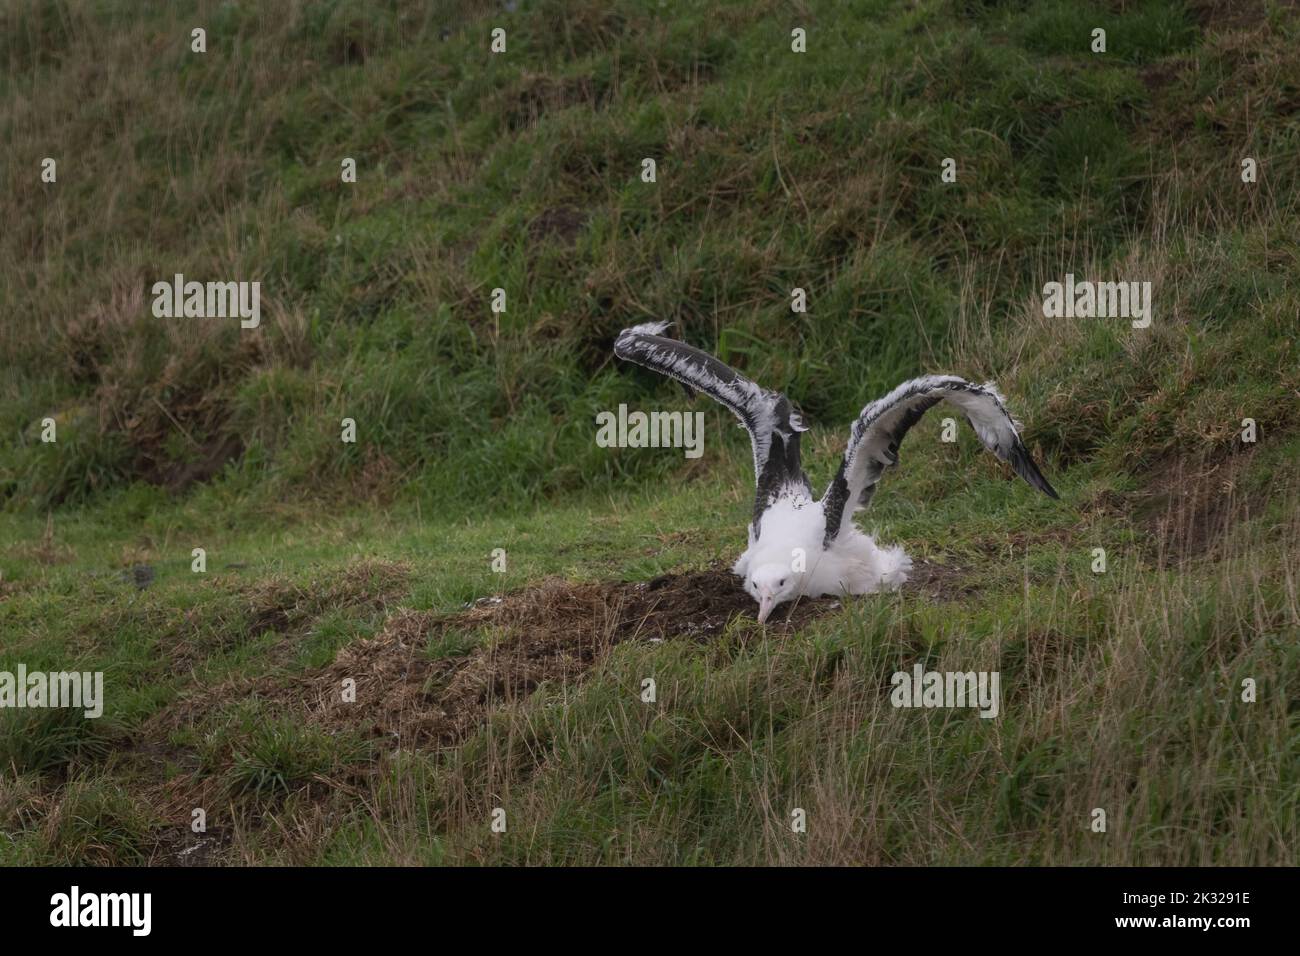 Fledging Royal Albatross stretching its wings, Otago Peninsula, New Zealand. Stock Photo